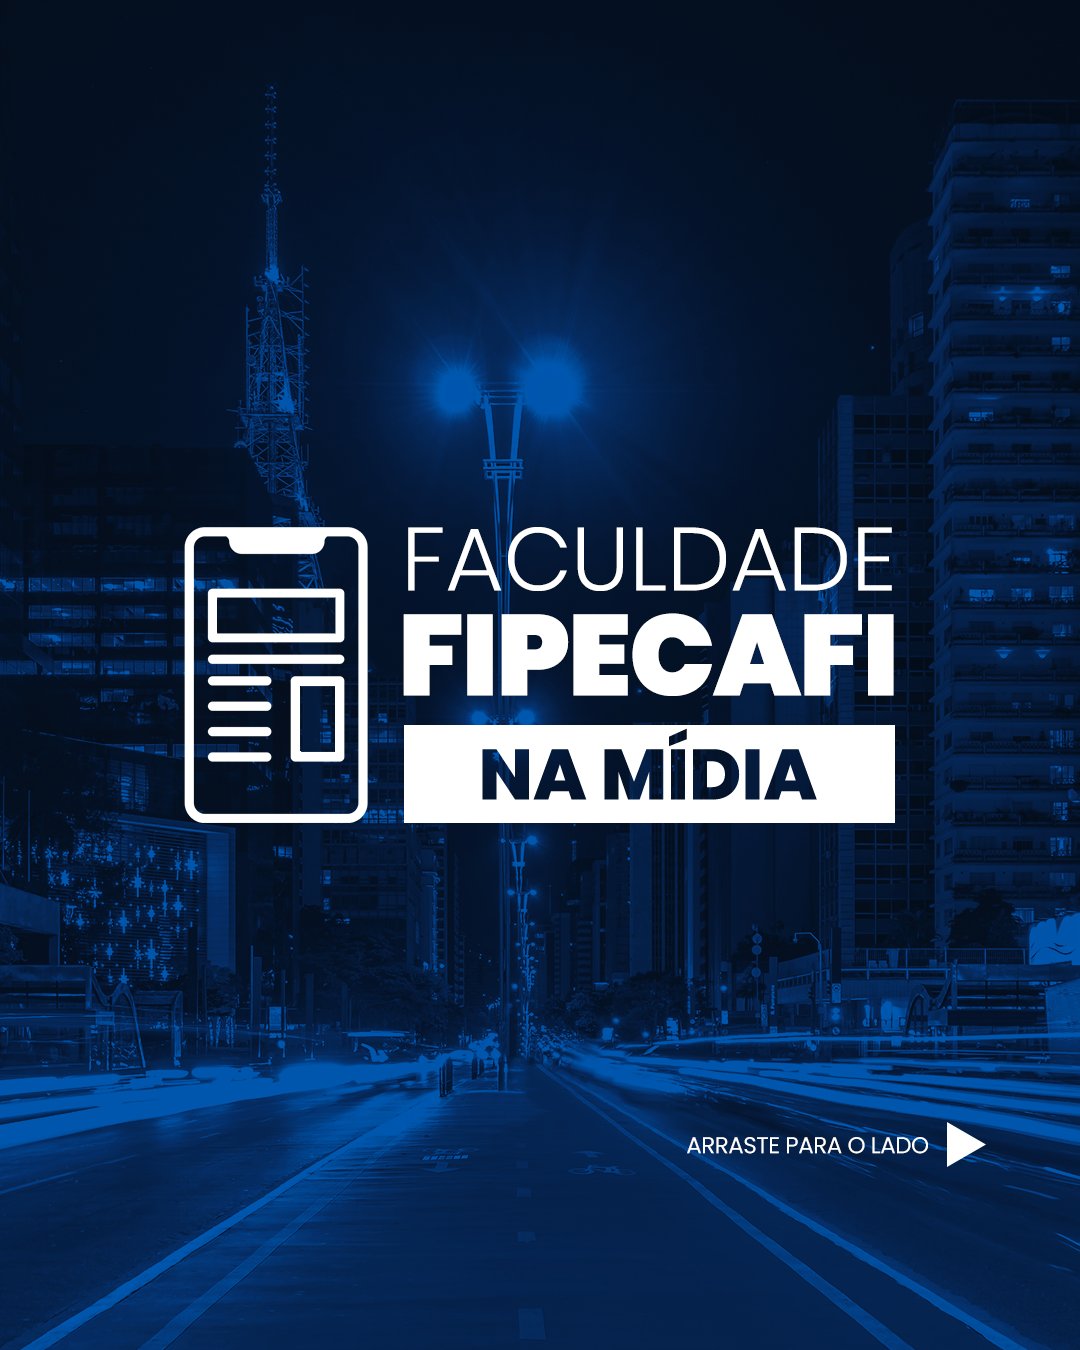 Fipecafi - Trade School in São Paulo